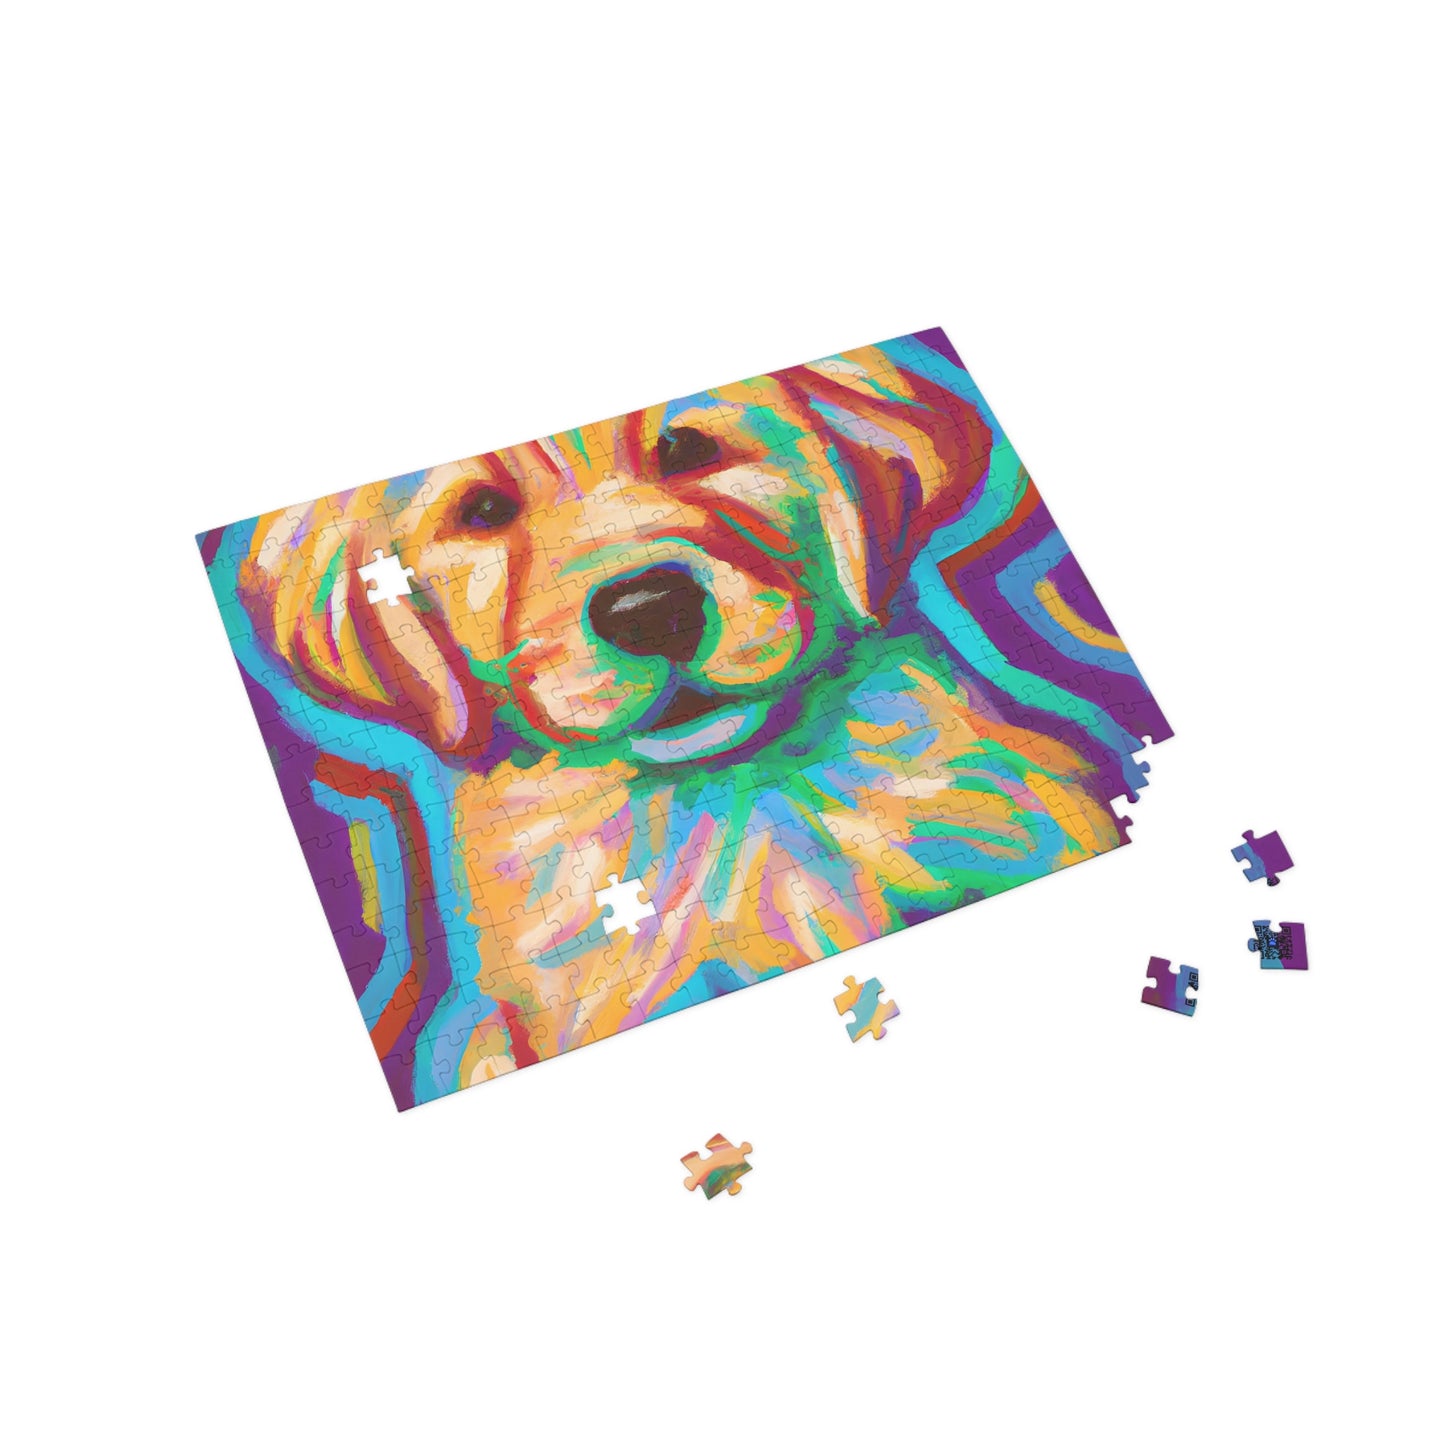 Pierre Puzzlemaker - Golden Retriever Puppy - Puzzle